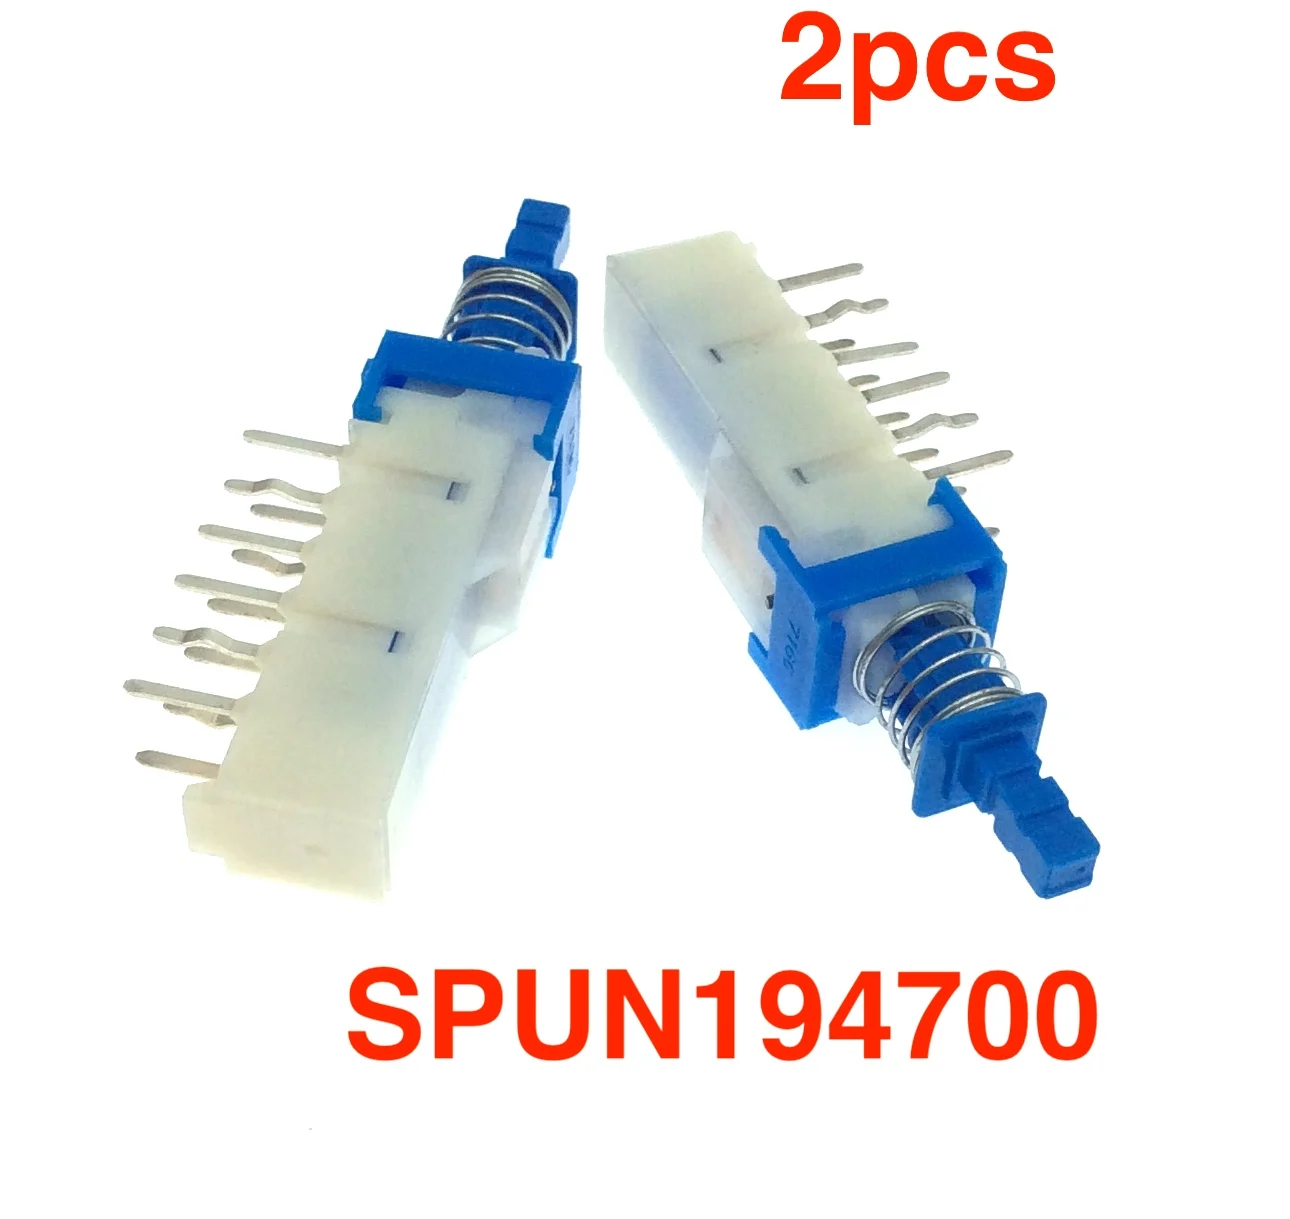 

2pcs Original for ALPS Key Switch Power Amplifier Mixer Car Switch SPUN194700 Self-locking